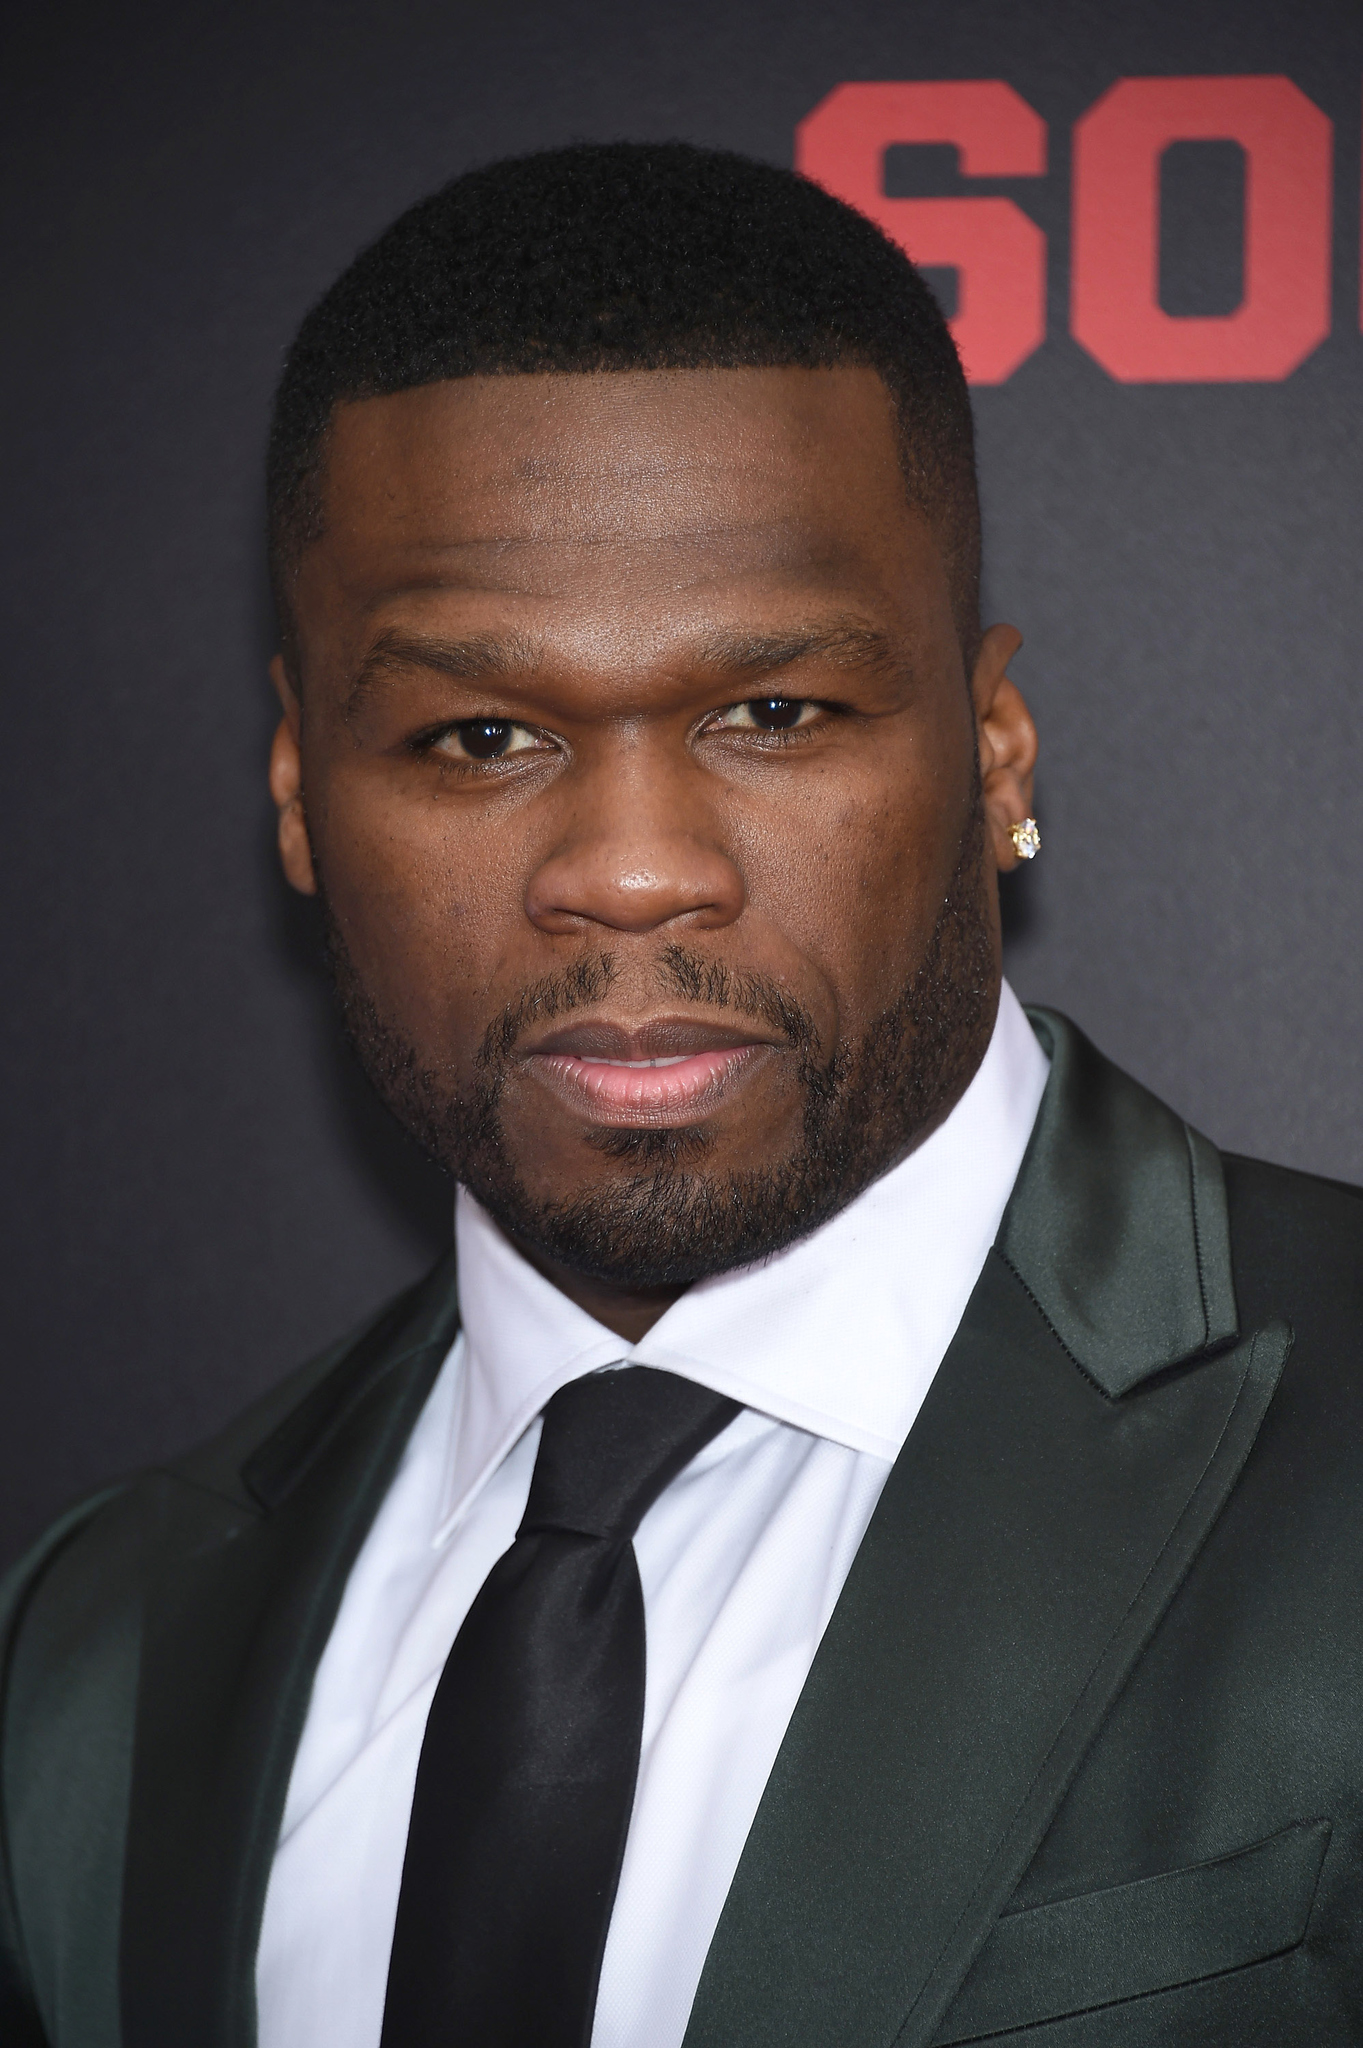  Biografi om 50 Cent